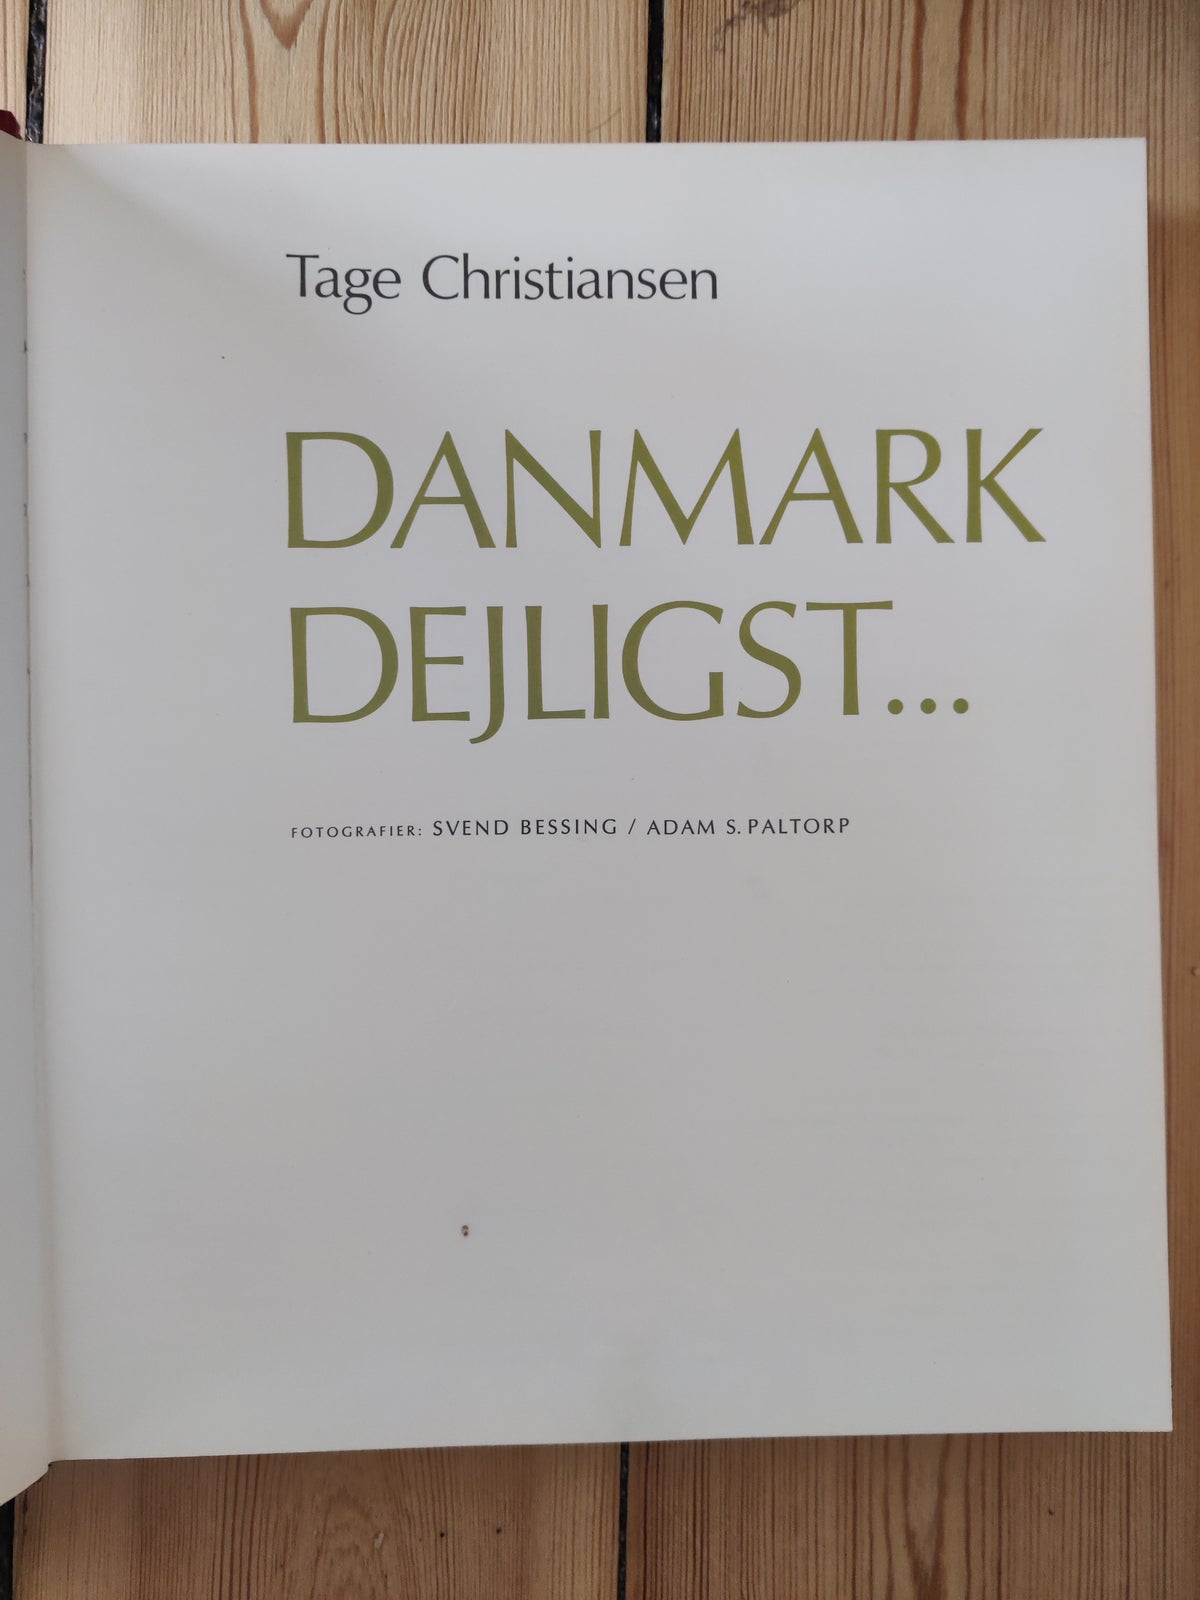 Danmark dejligst, Tage Christiansen, anden bog